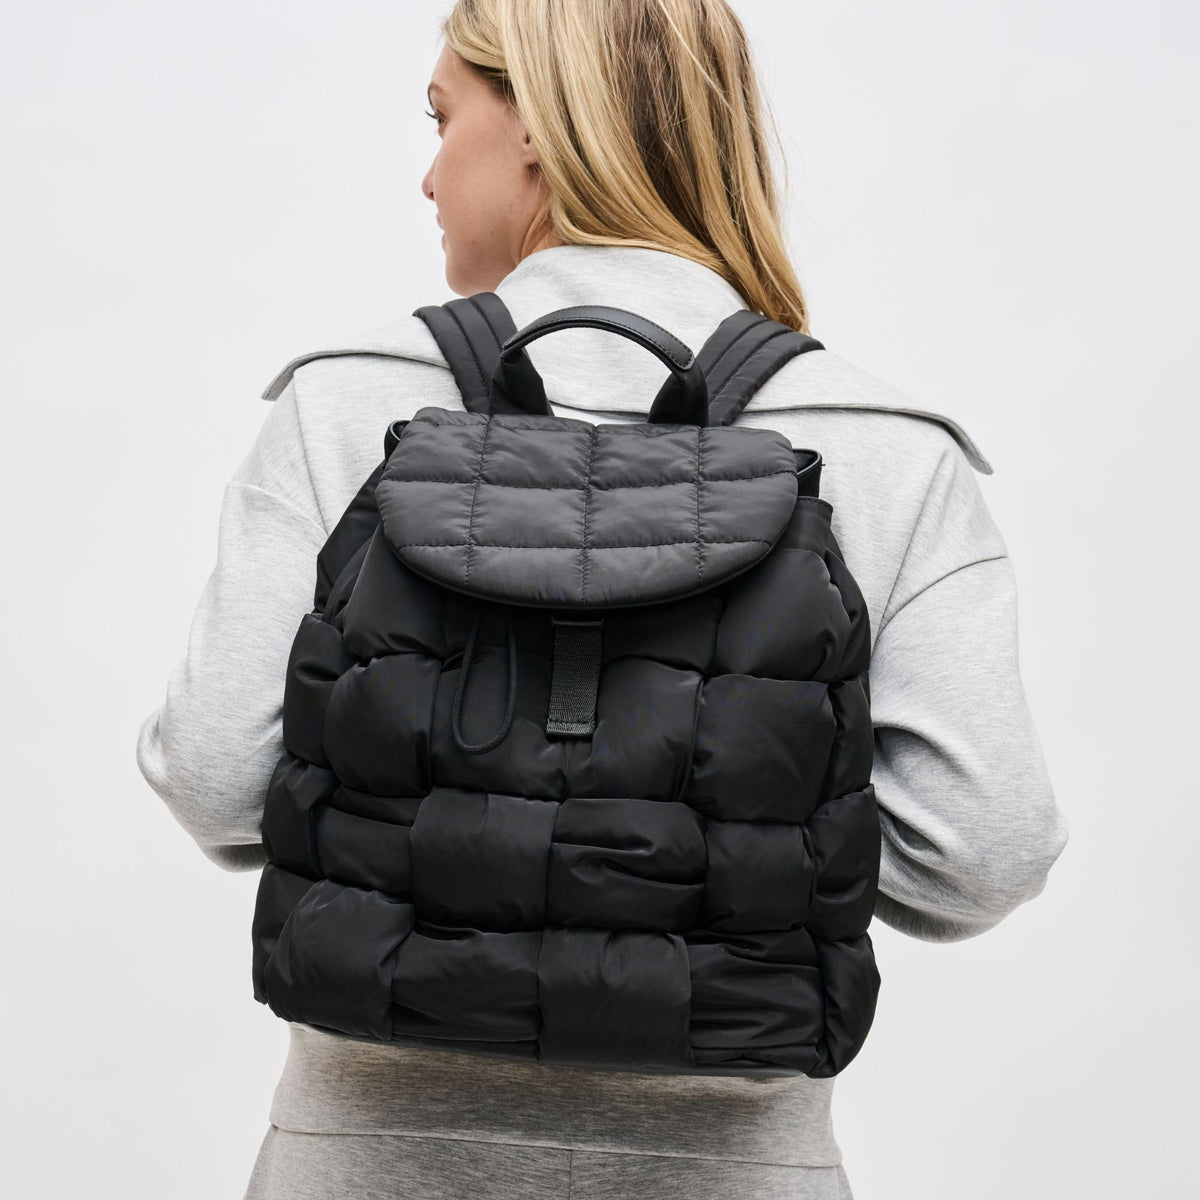 Woman wearing Black Sol and Selene Perception Backpack 841764107730 View 1 | Black